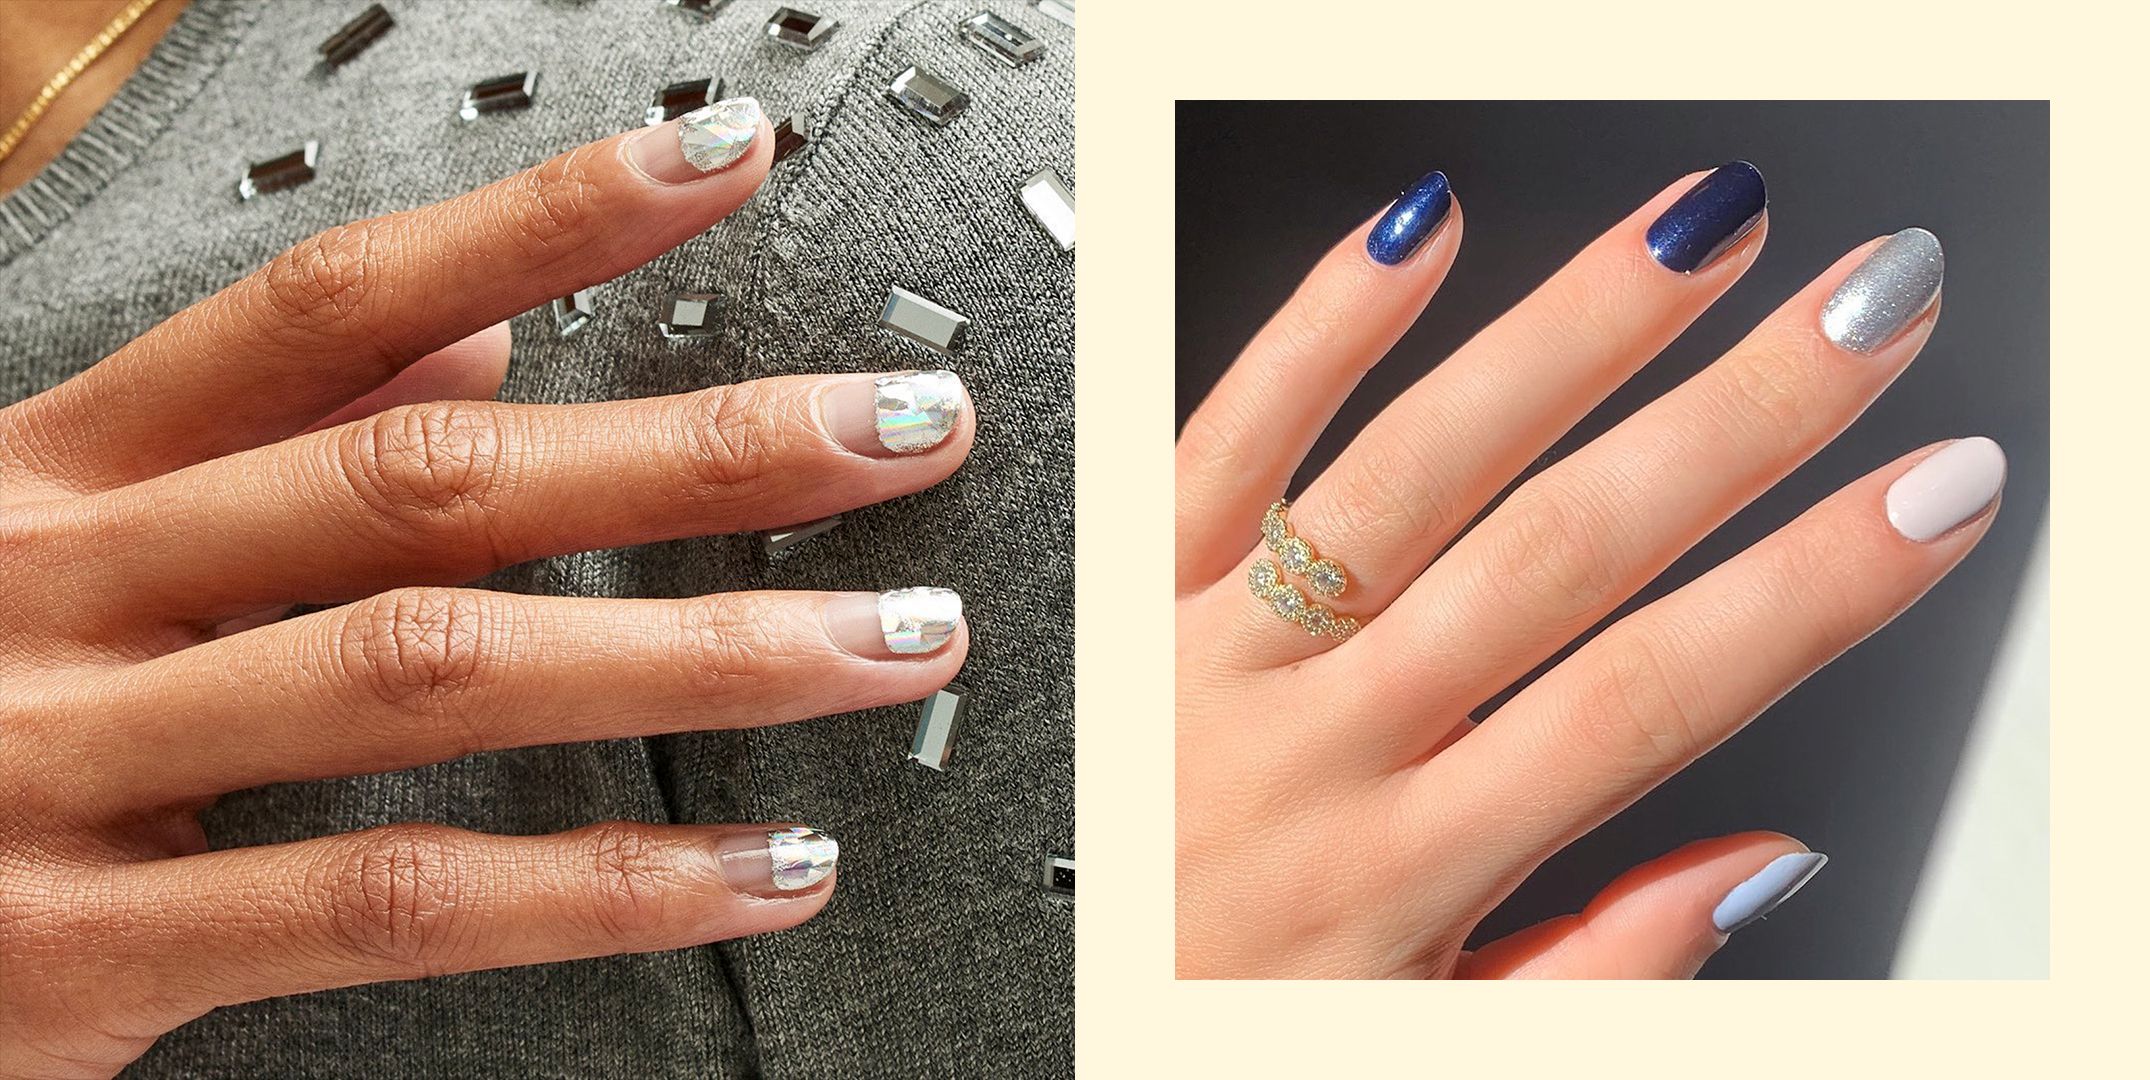 glitter gel nail design ideas